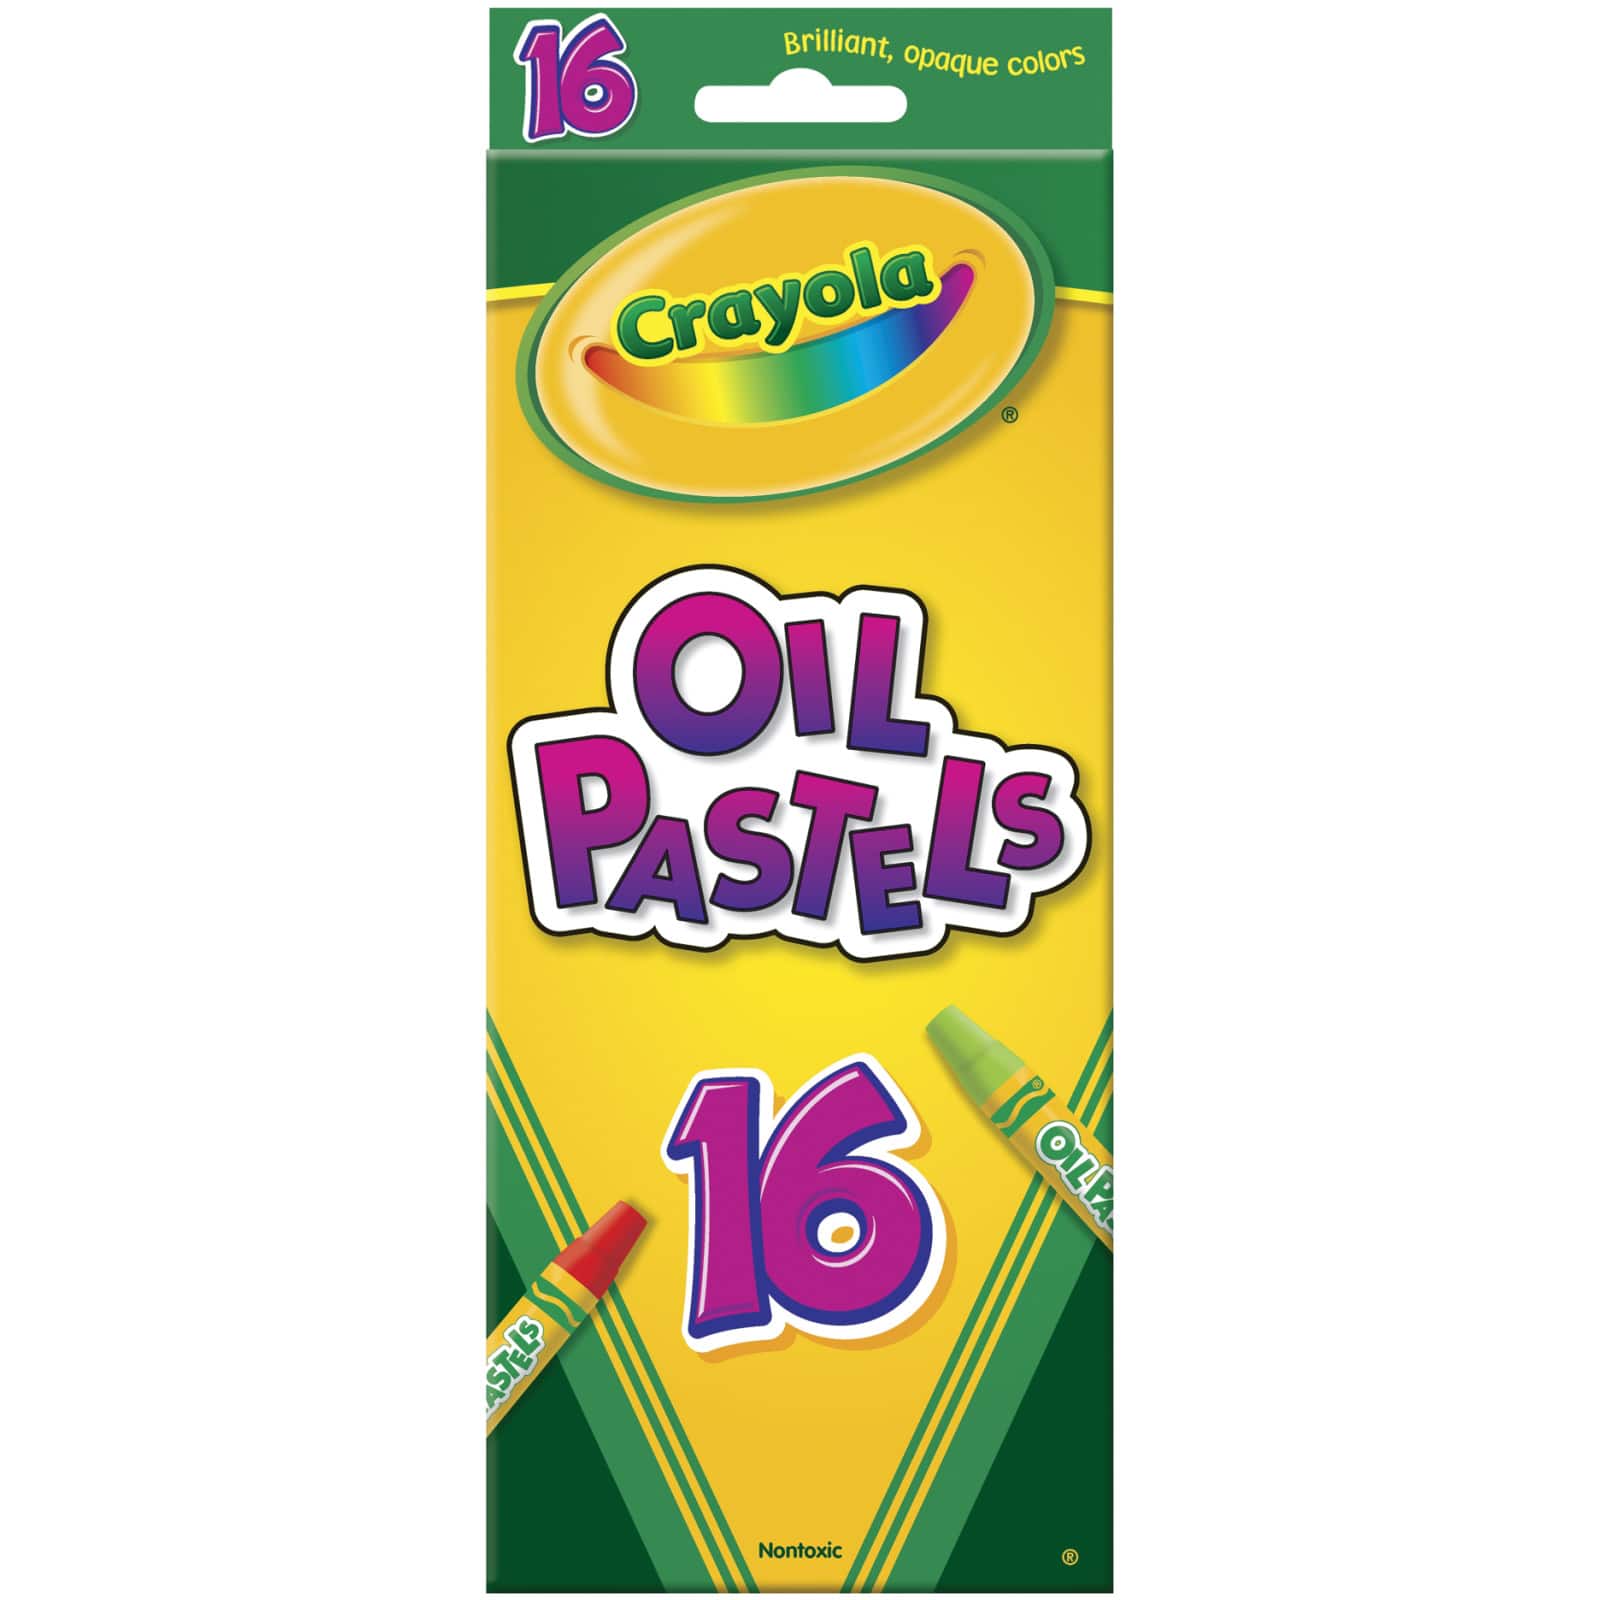  Crayola Portfolio Series Oil Pastels, Water Soluble